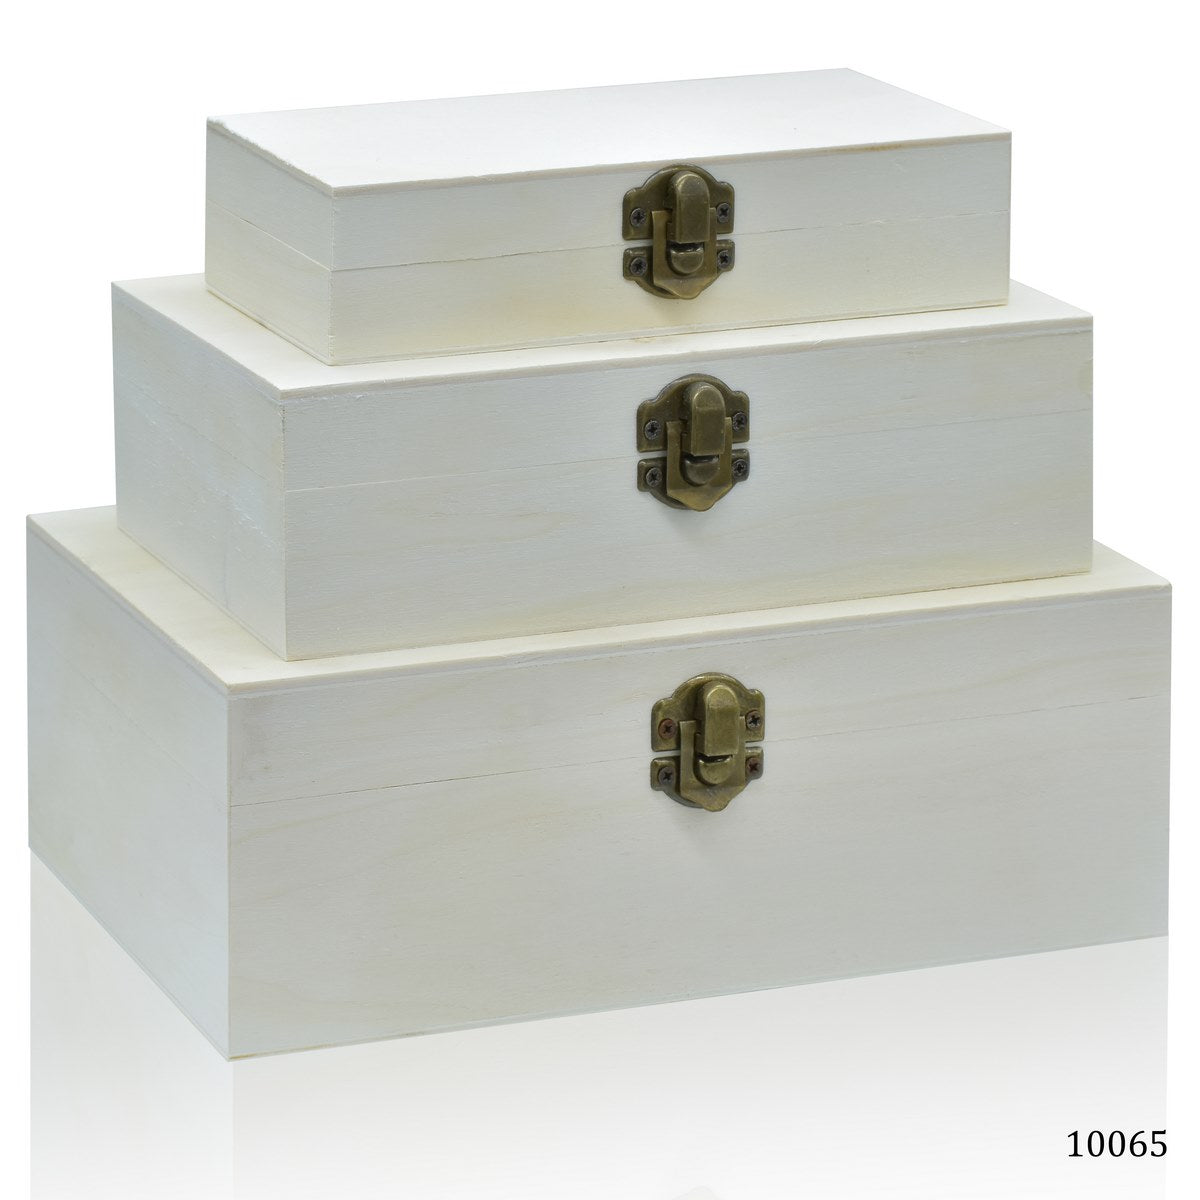 jags-mumbai Wooden Box Wooden Empty Box Set Of 3 Pcs Rectangle Shape